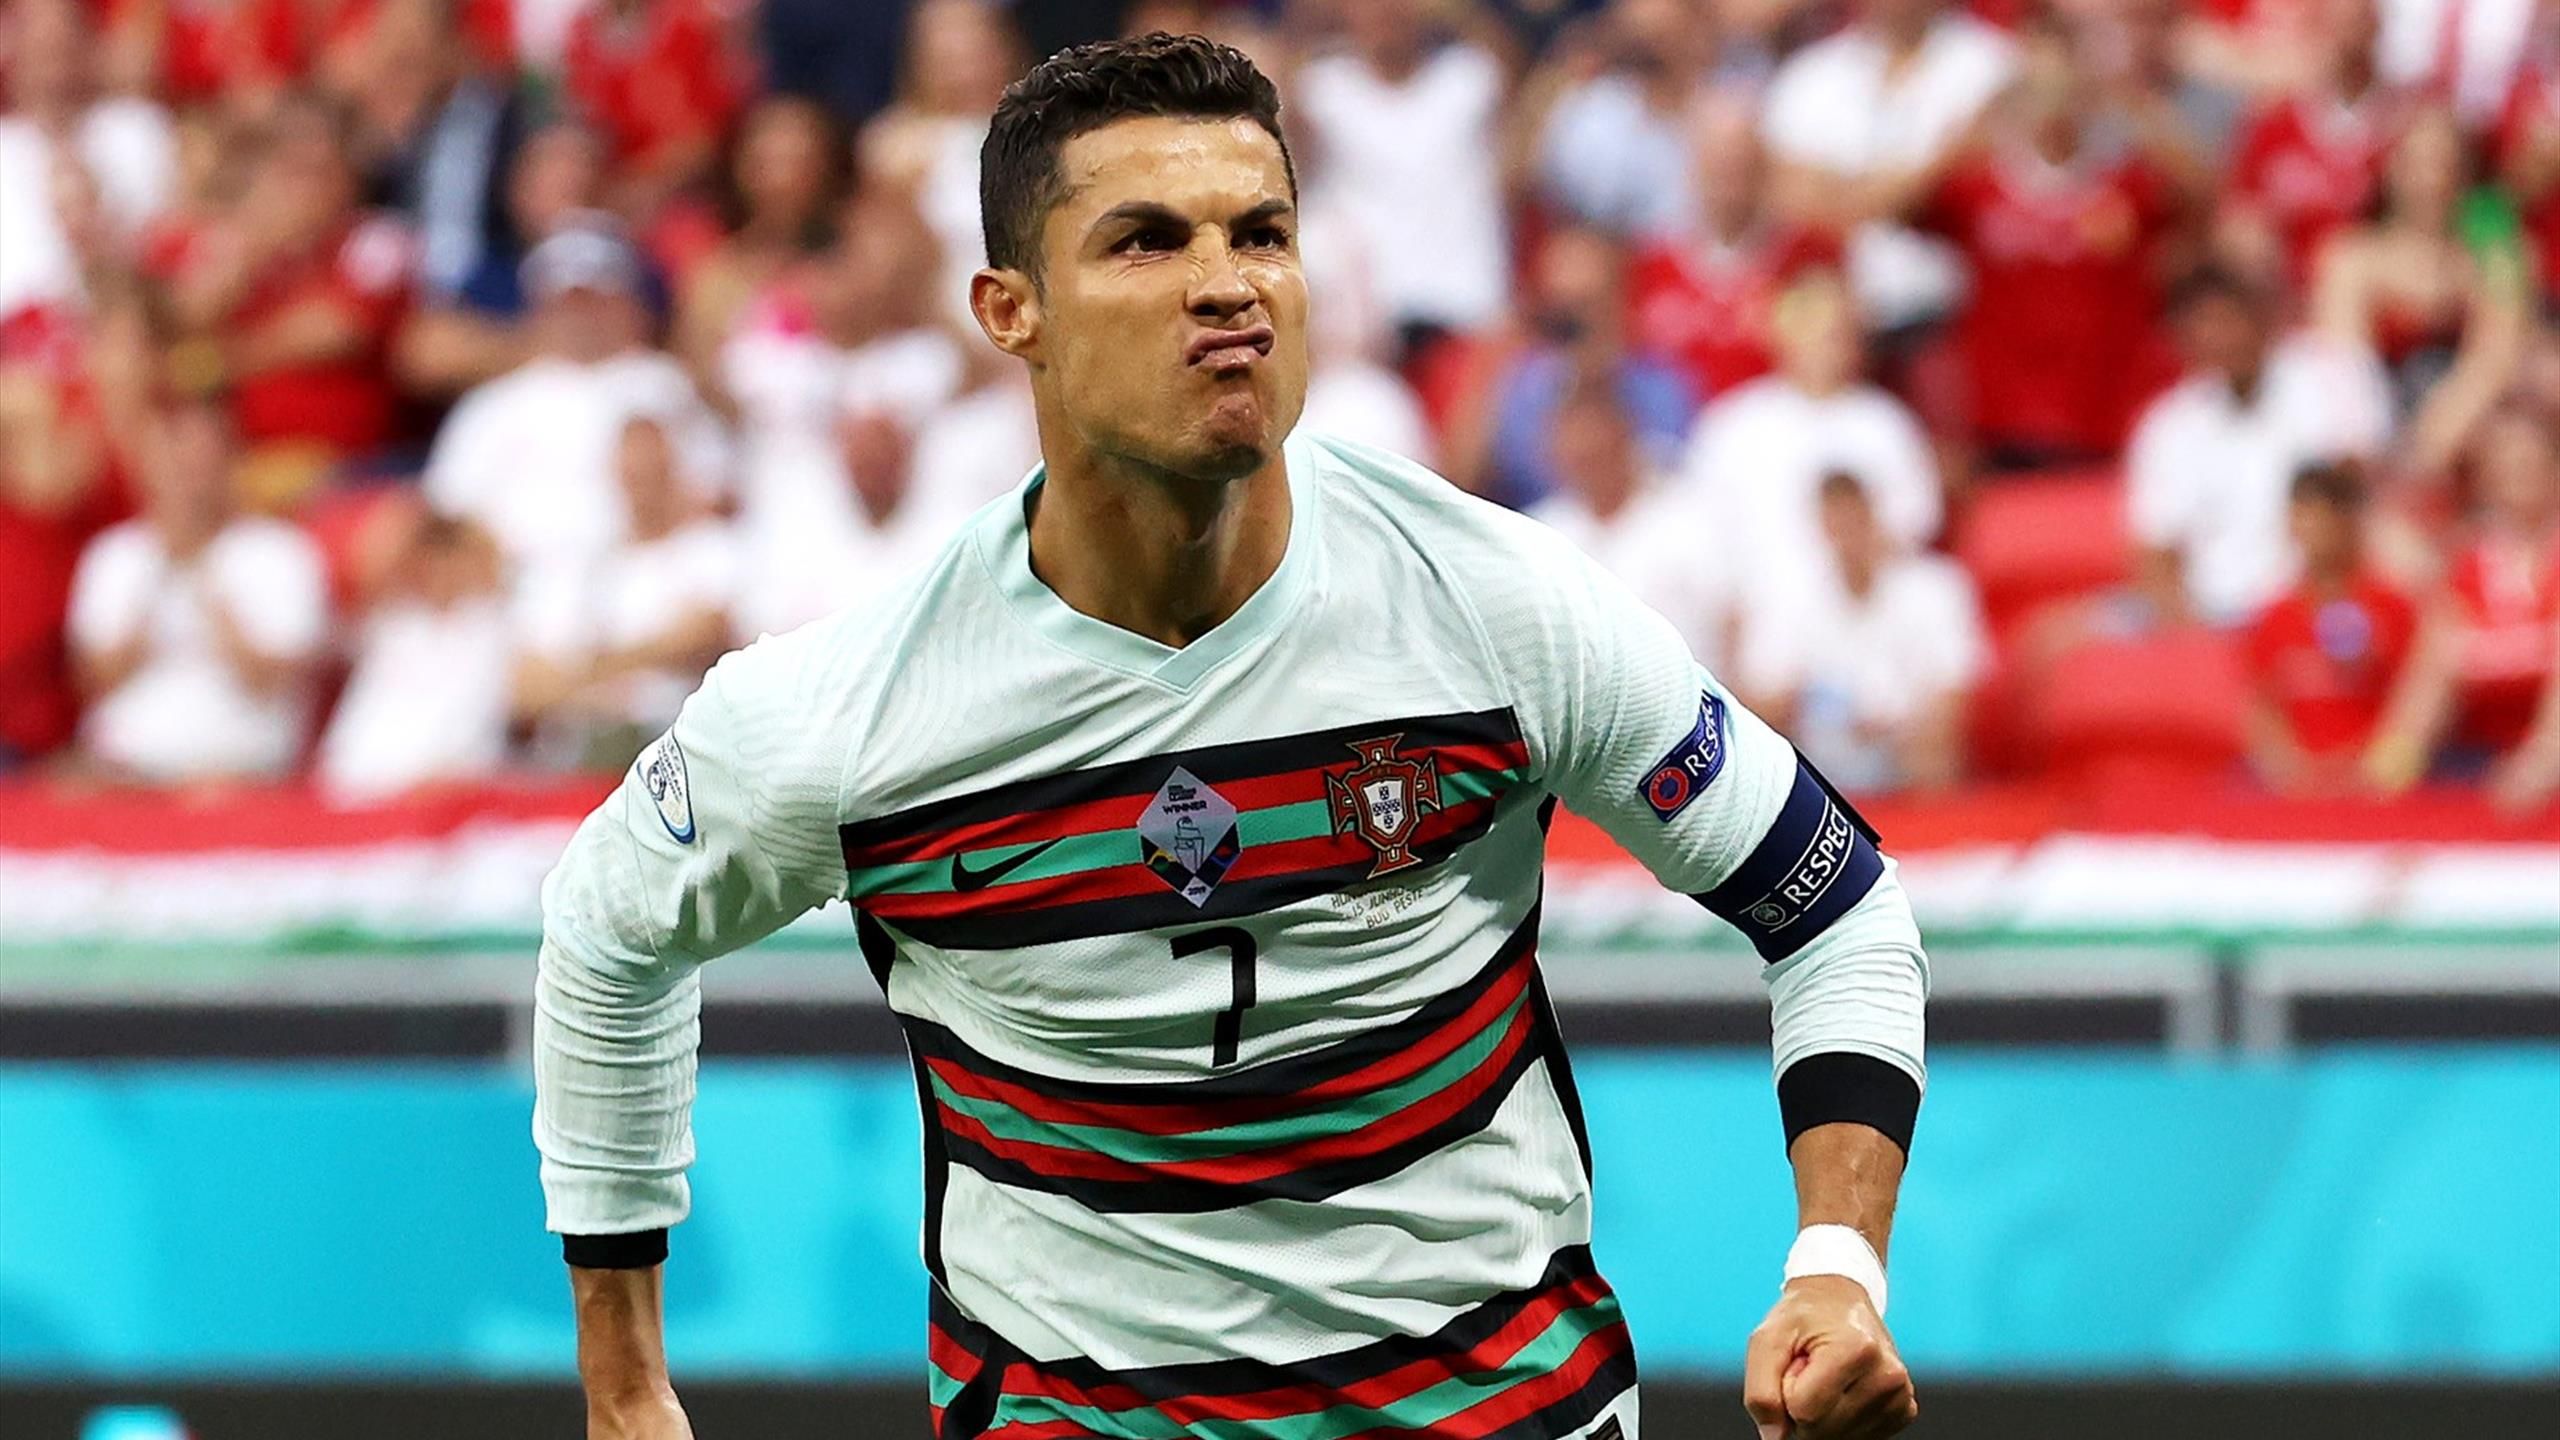 Cristiano Ronaldo Becomes Top Scorer In European Championship History With 11 Goals Eurosport